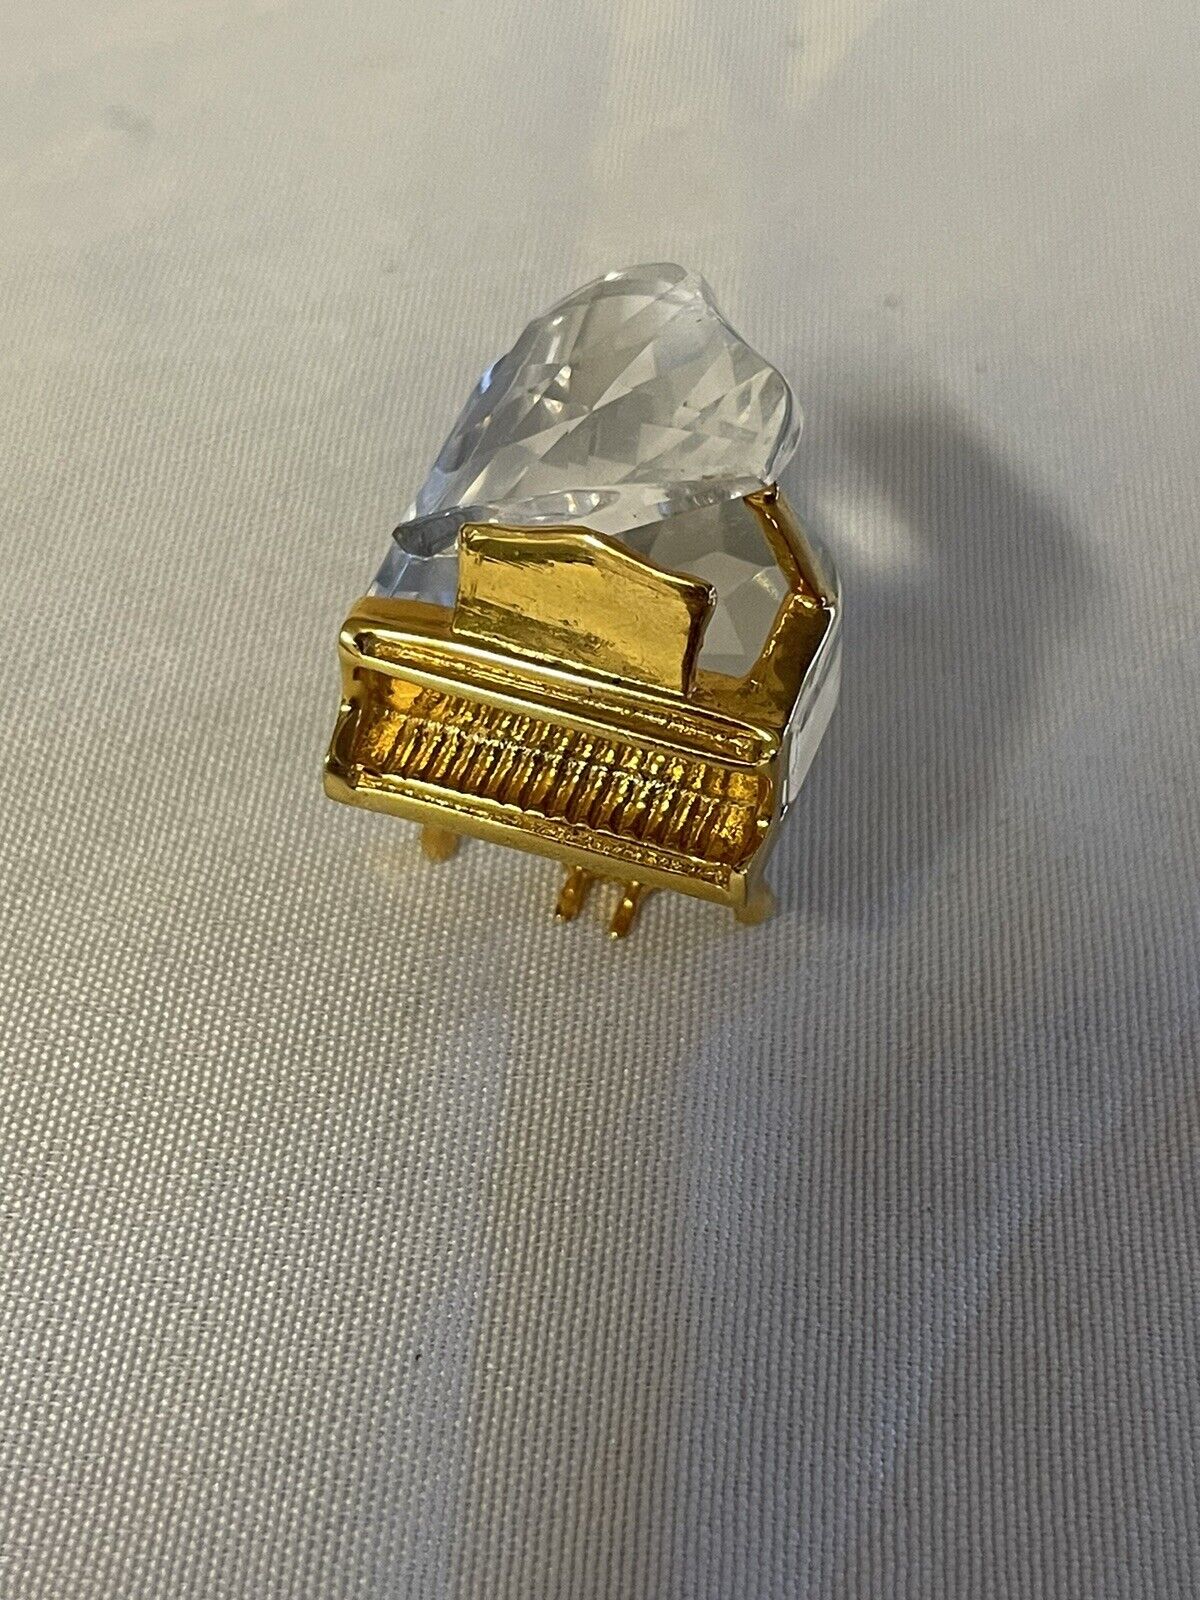 Swarovski Crystal Memories Gold Miniature Grand Piano